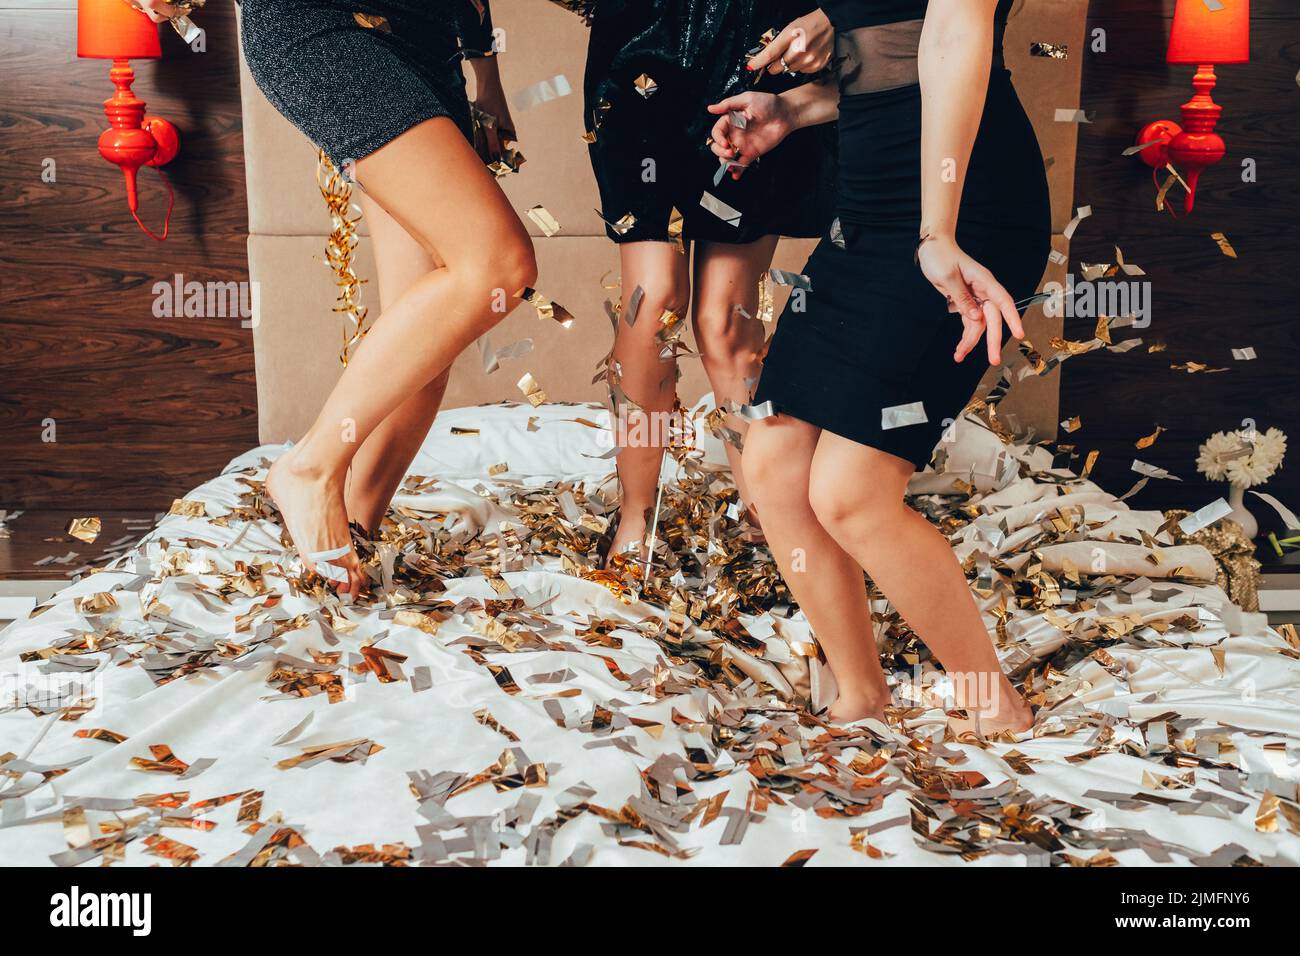 party females fun joy confetti women black Stock Photo